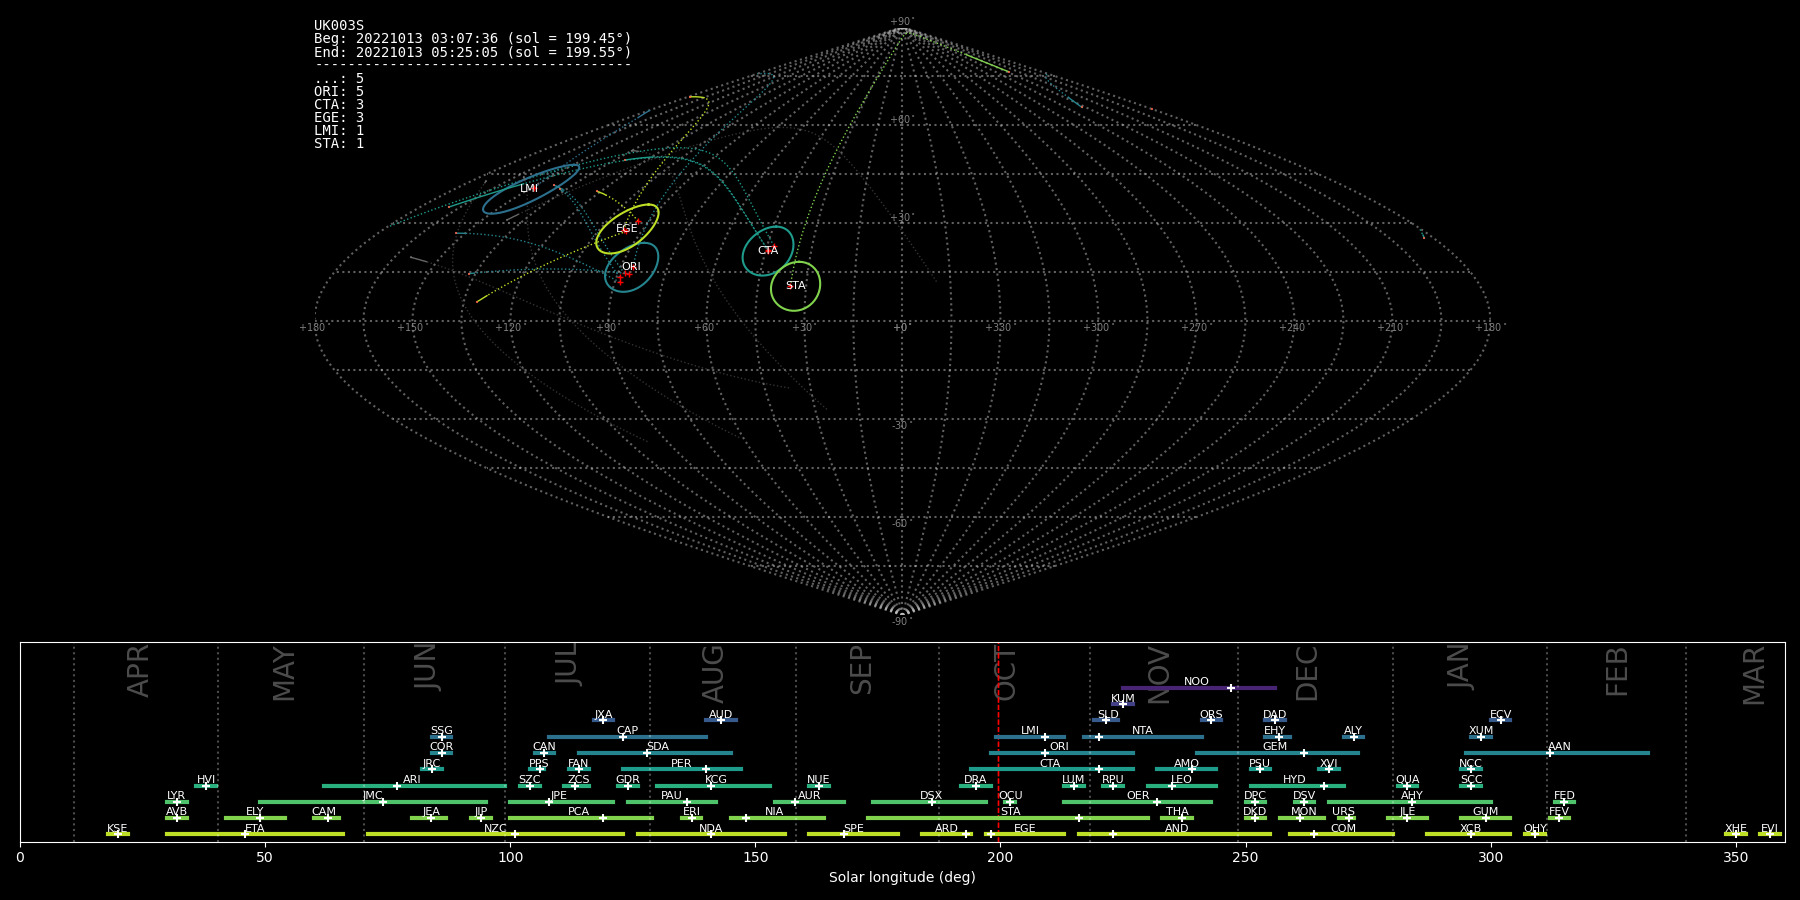 Analysis of meteor radiants